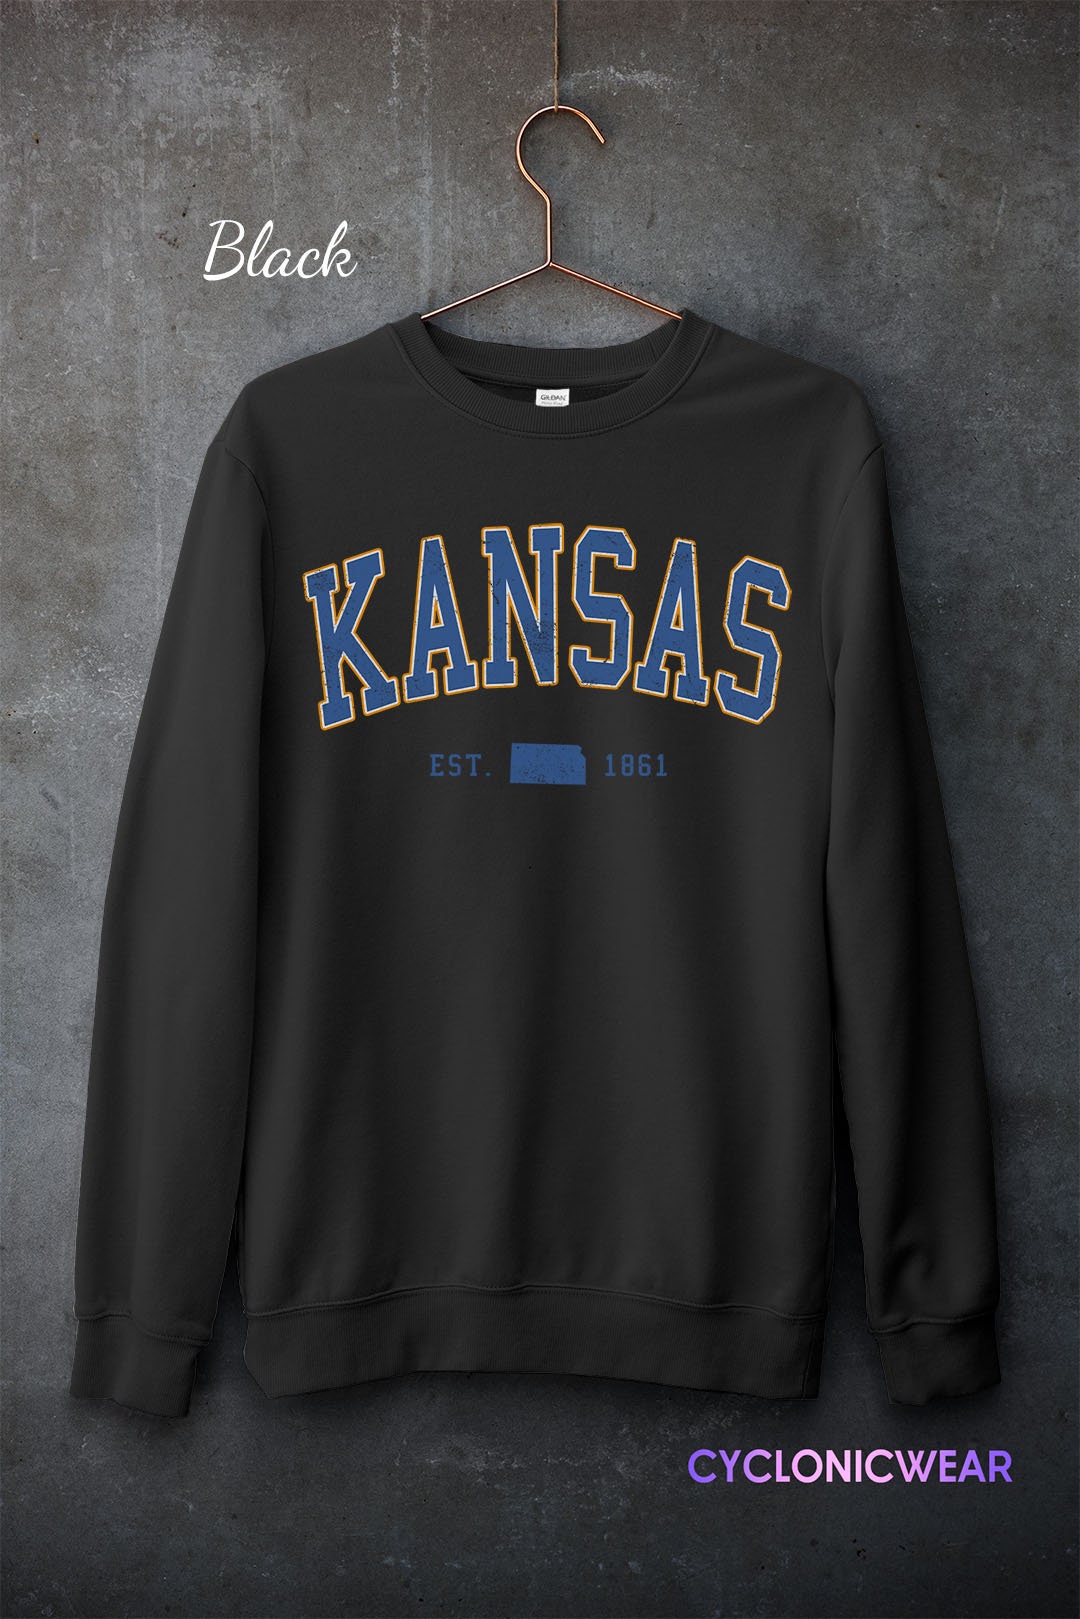 Kansas College Sweatshirt, Kansas Vintage Style Sweater, Kansas Fan Sweatshirt, Kansas Student Sweater, Kansas Travel Gift, Midwest Crewneck